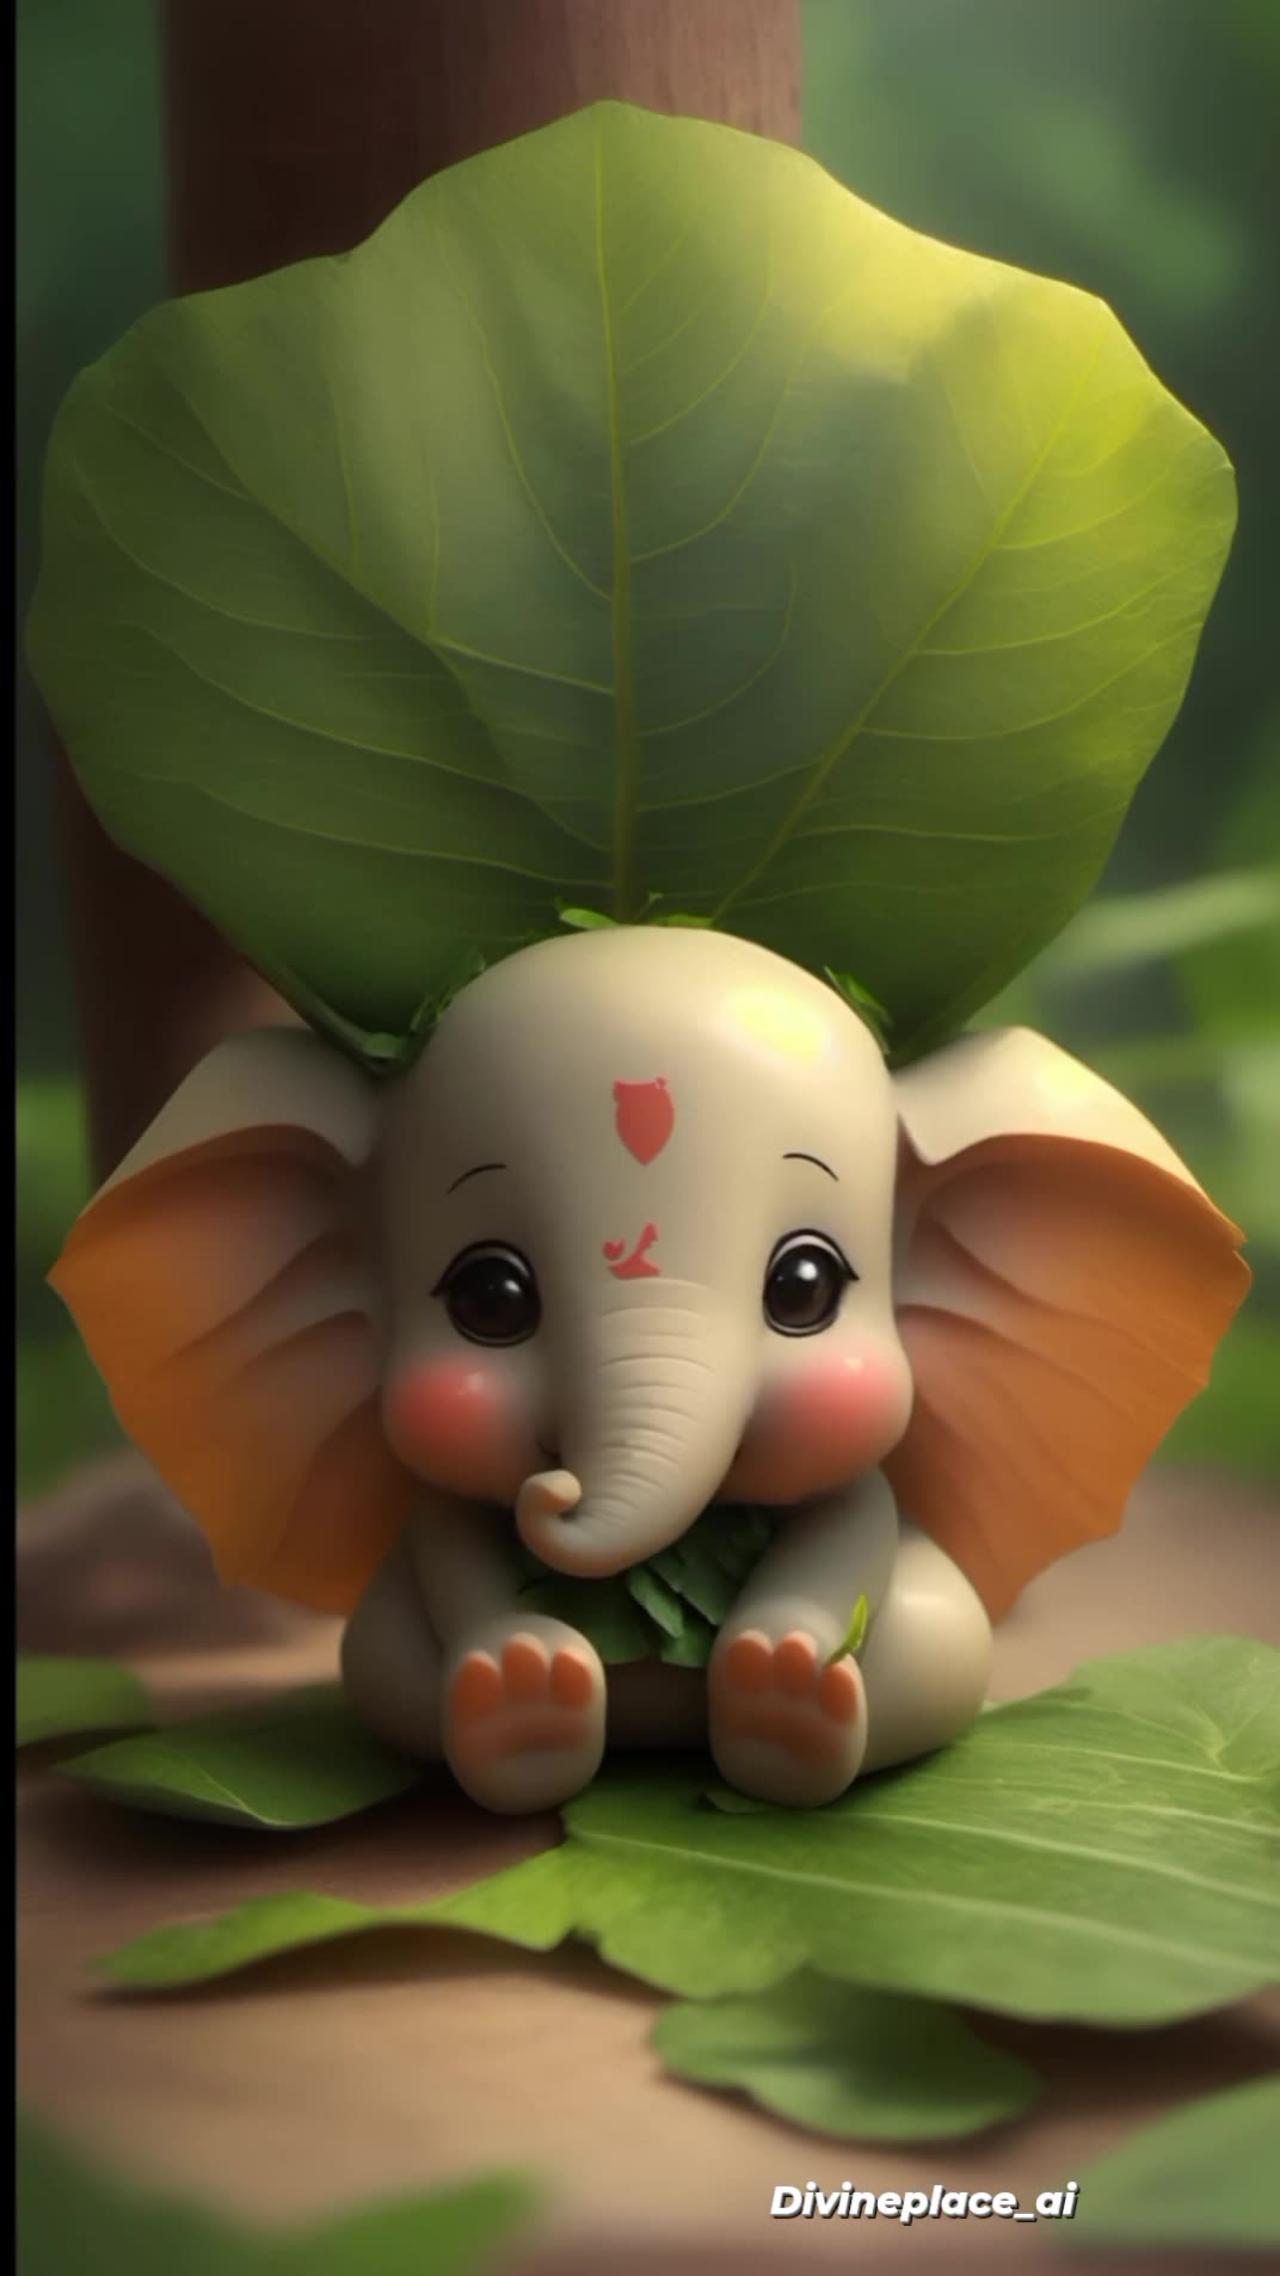 Happy Ganesh chaturthi🙏 everyone